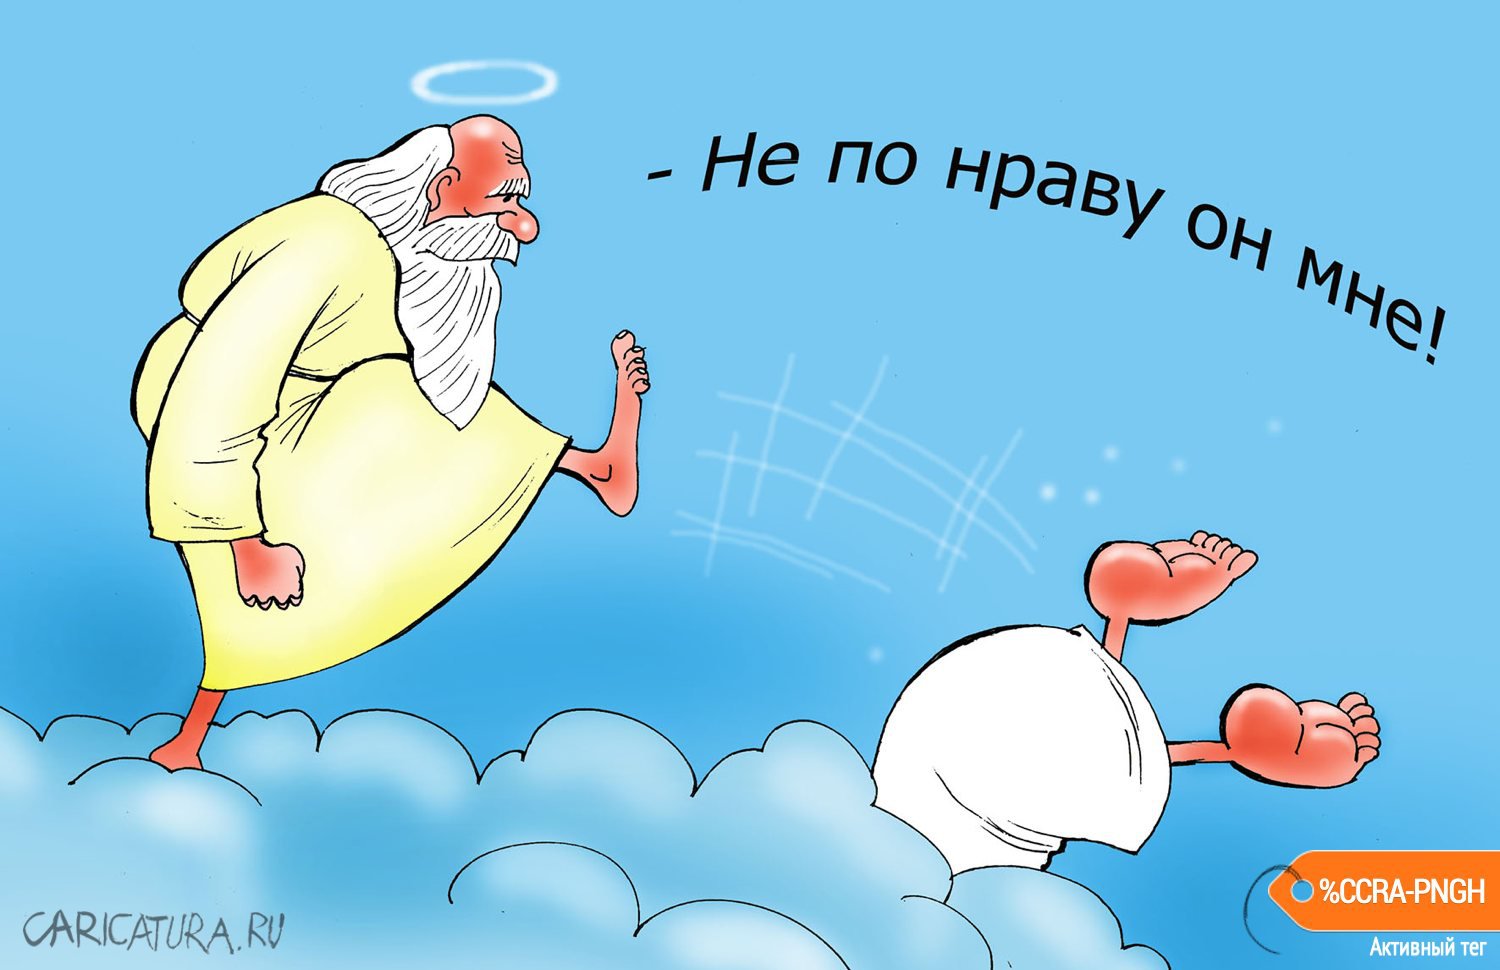 Карикатура "С глаз долой!", Александр Попов